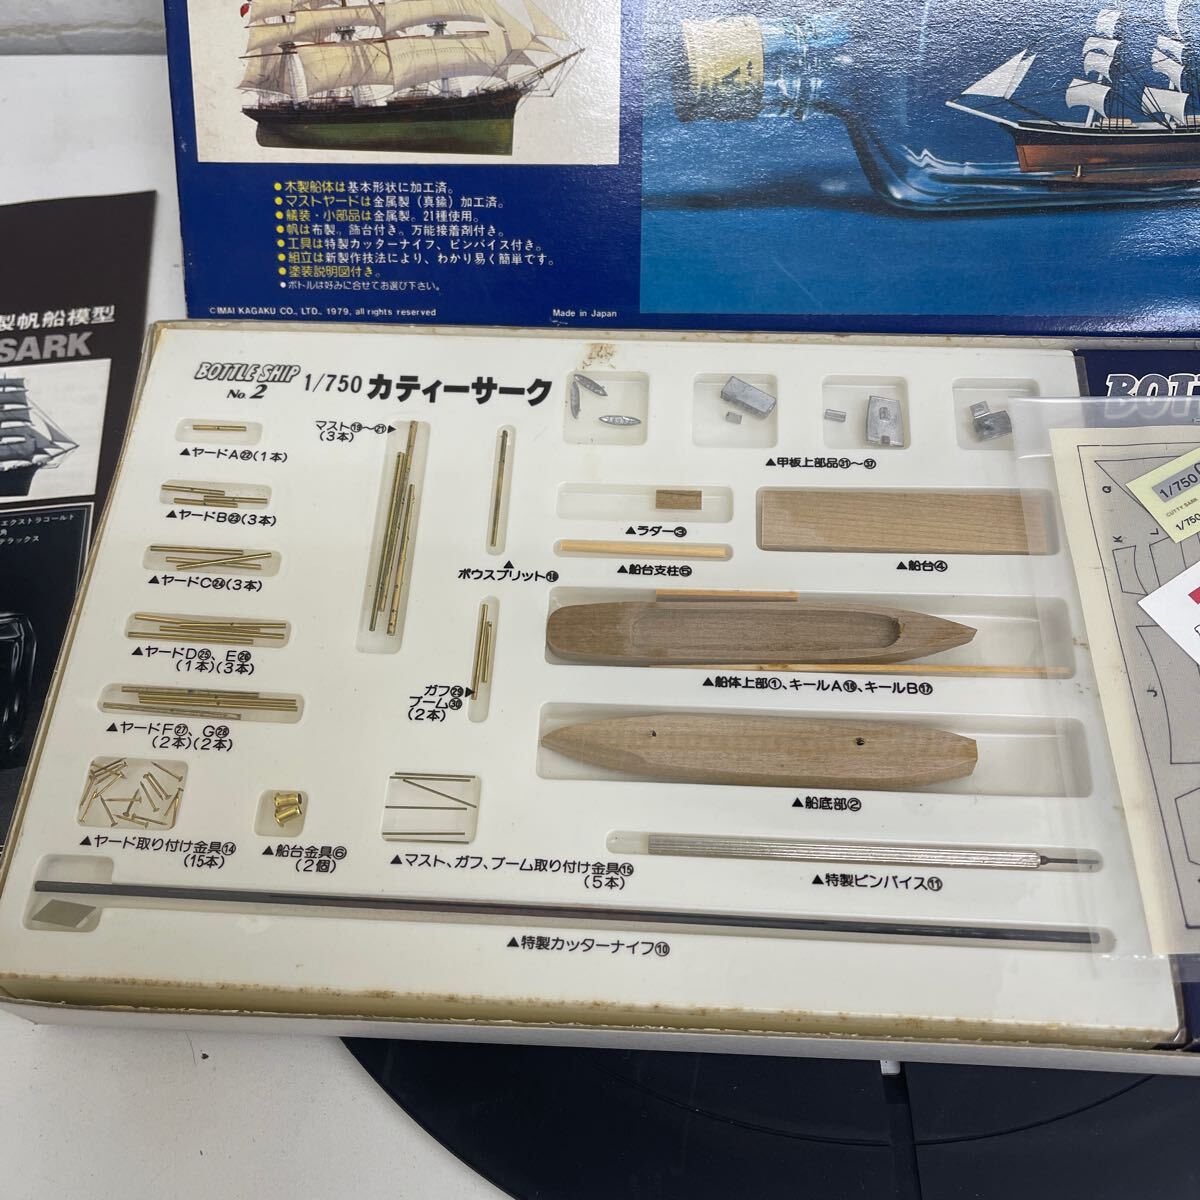 B401. 25. Imai 1/750 bottle sip wooden sailing boat model ka tea sa-kB-923 box deterioration plastic model 